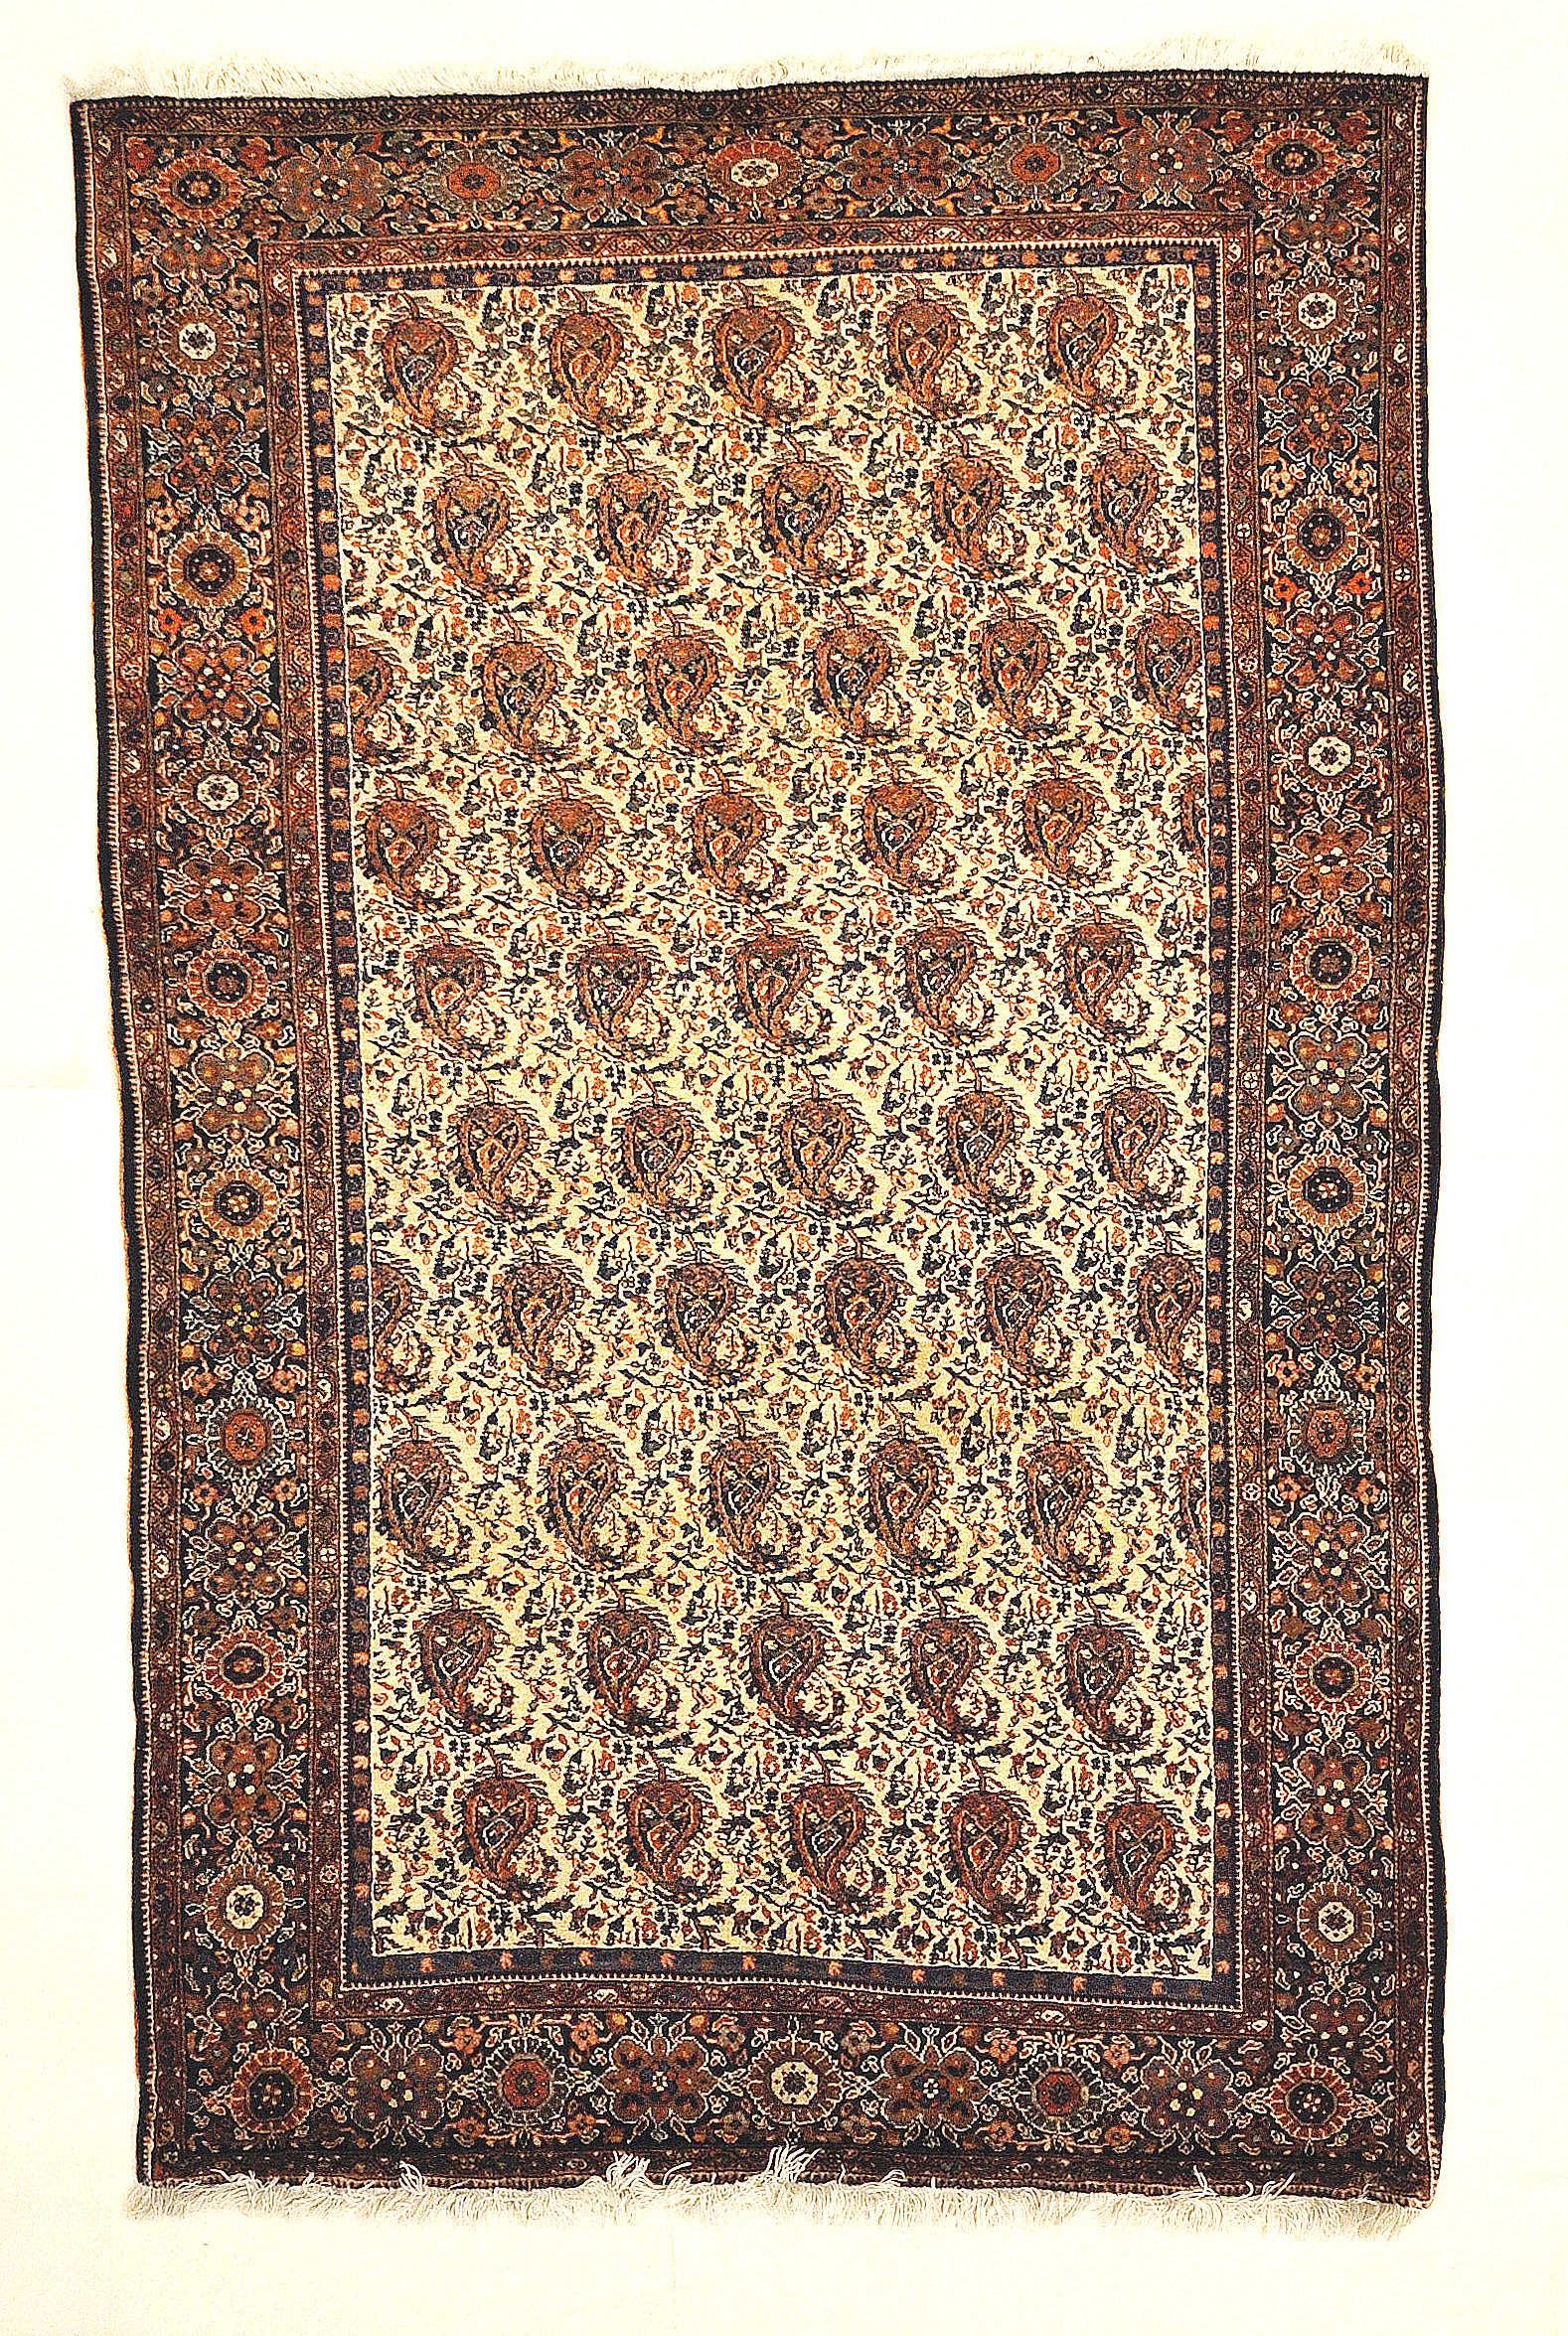 Antique Persian Farahan All-over Botteh Fine Authentic Design Genuine Carpet Art Intricate Santa Barbara Design Center Rugs and More